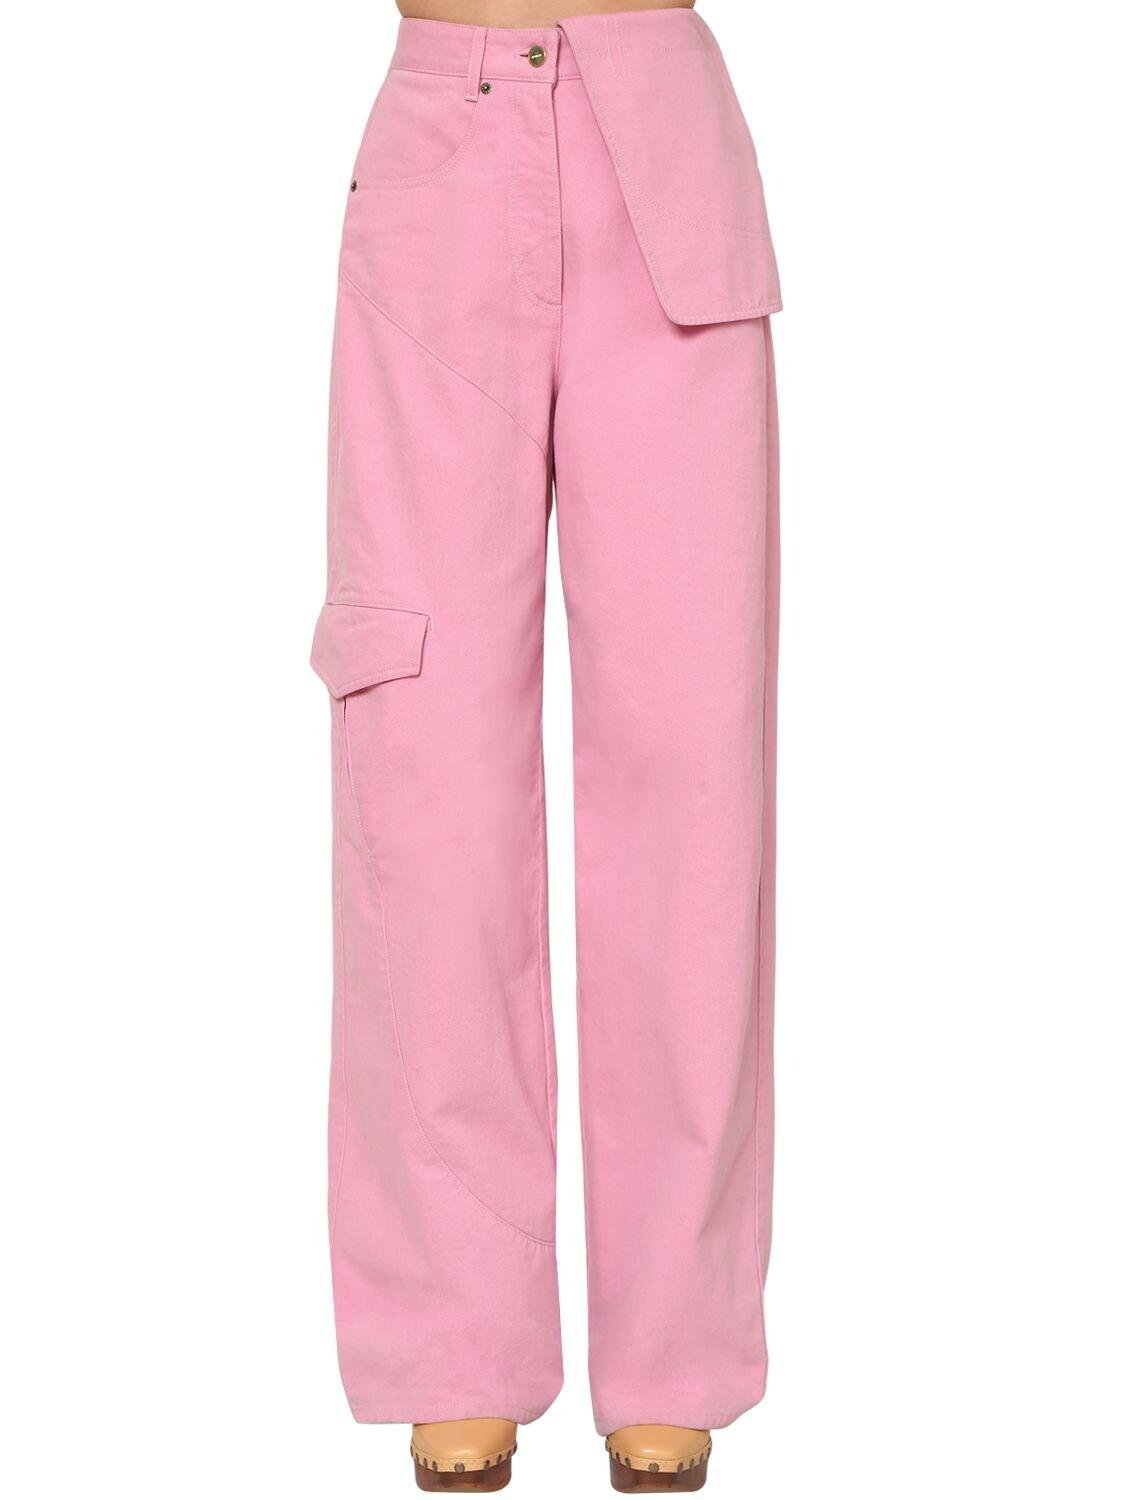 Jacquemus High Waist Cotton Denim Cargo Pants in Pink - Lyst